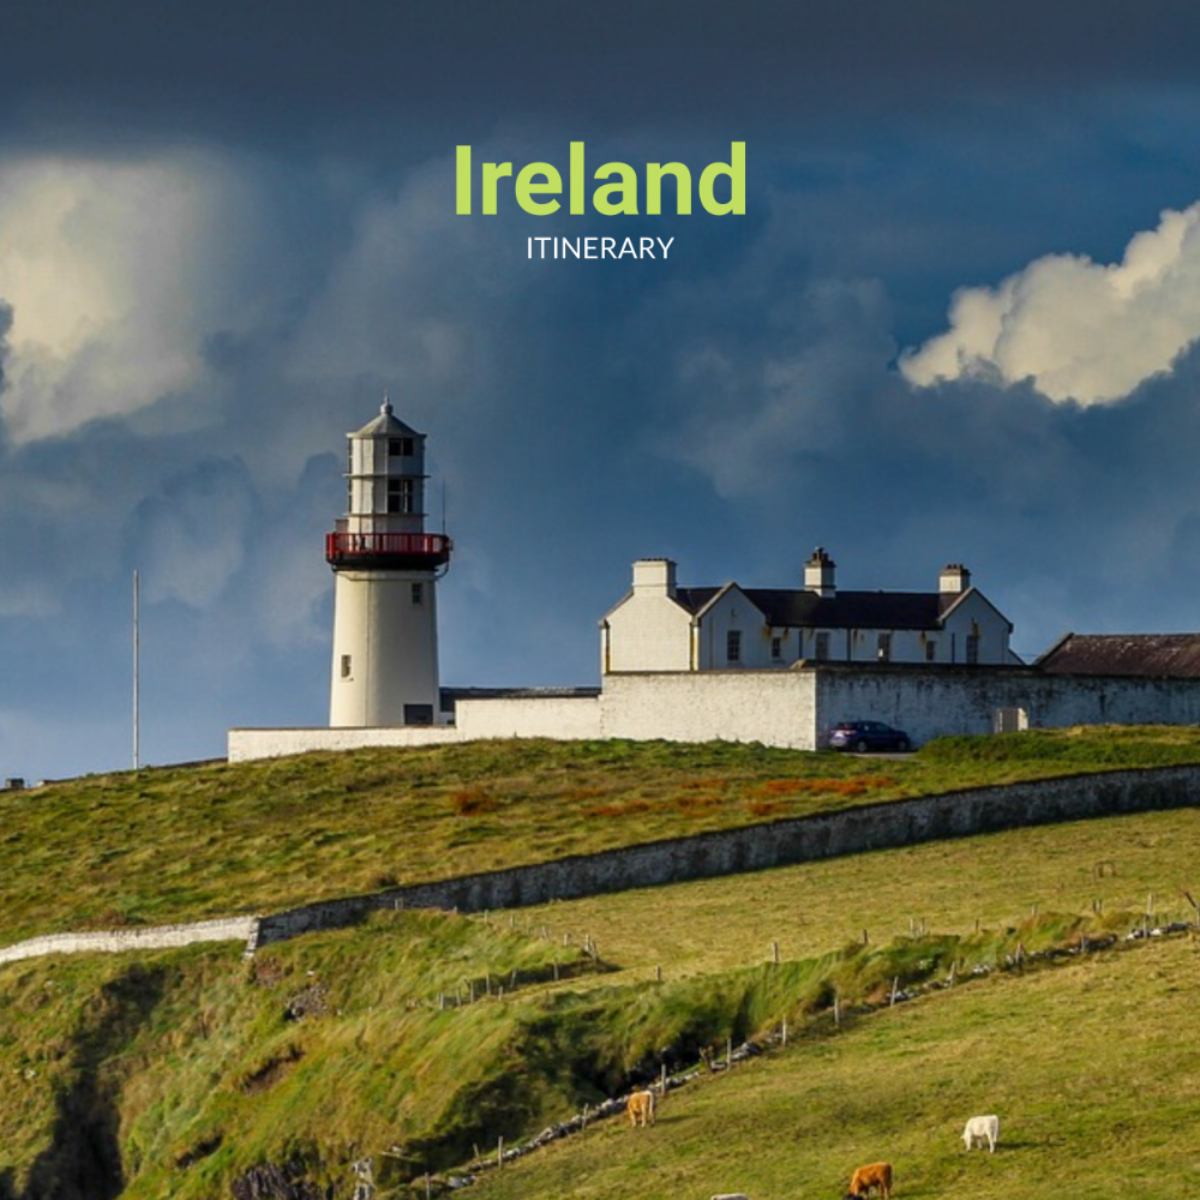 Ireland Itinerary Template